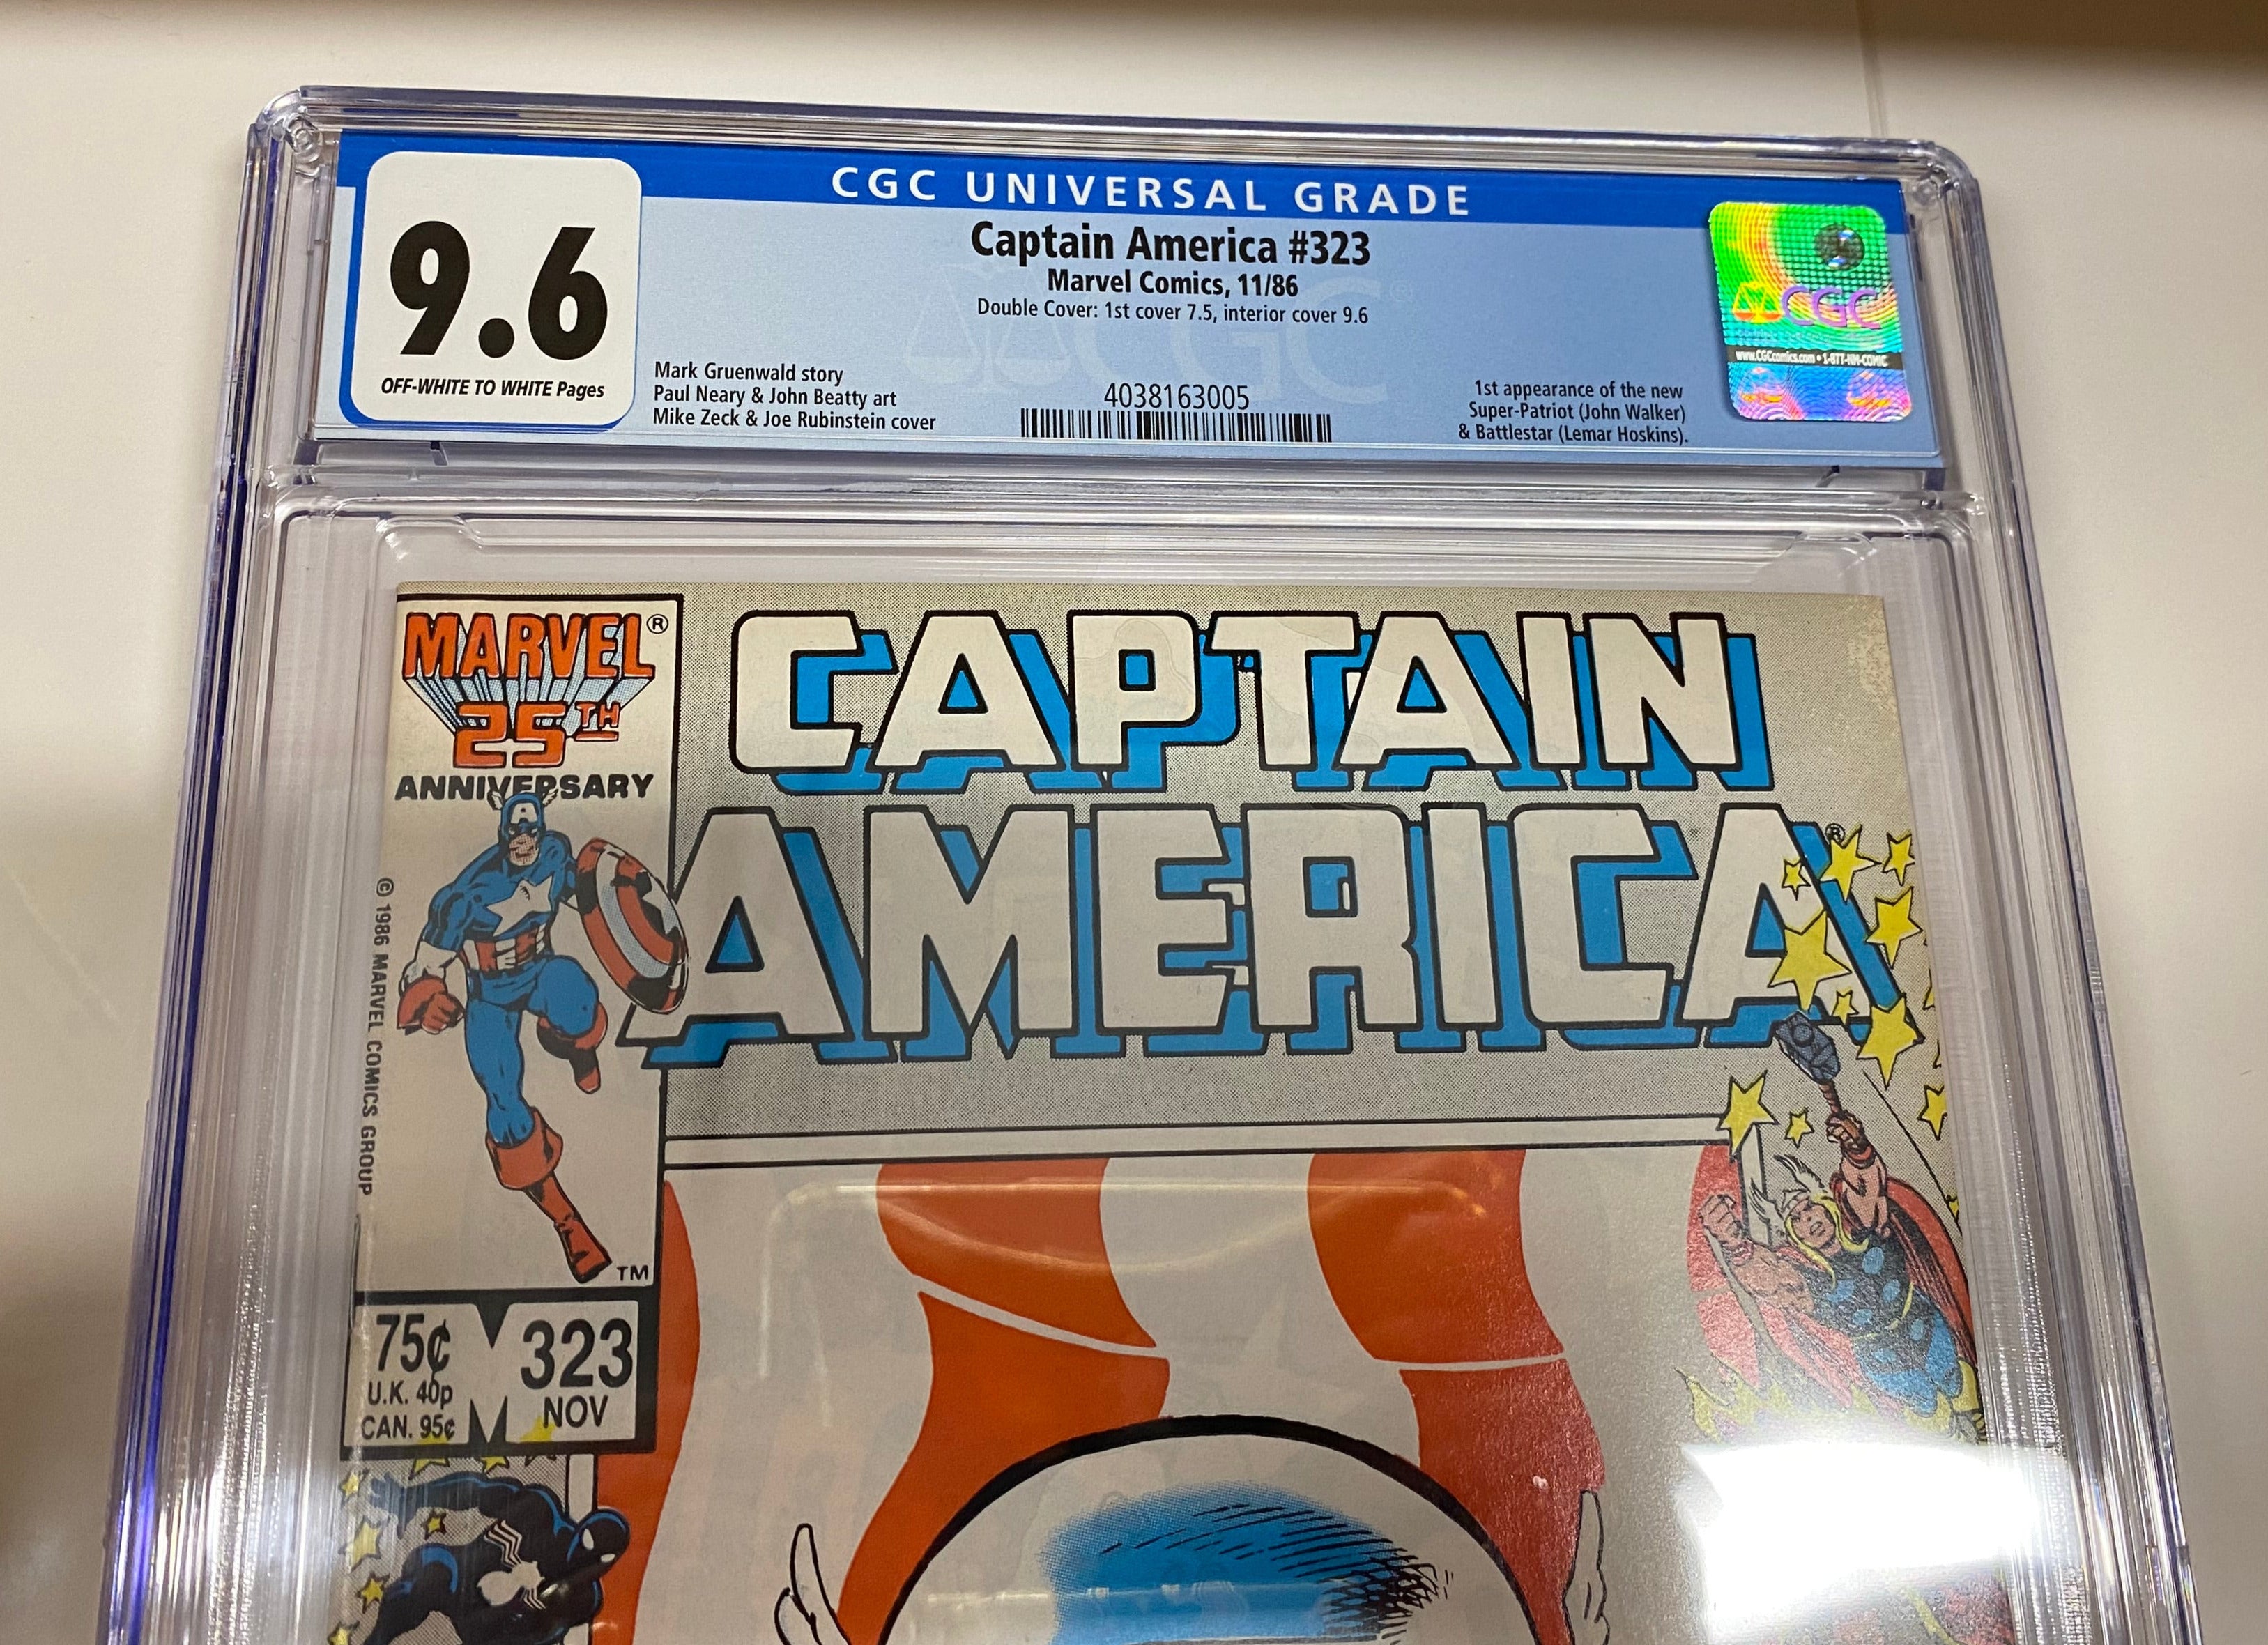 CAPTAIN AMERICA #323 CGC 9.6 NM+ -Double Cover- 1st App. of NEW Super-Patriot & Battlestar | L.A. Mood Comics and Games